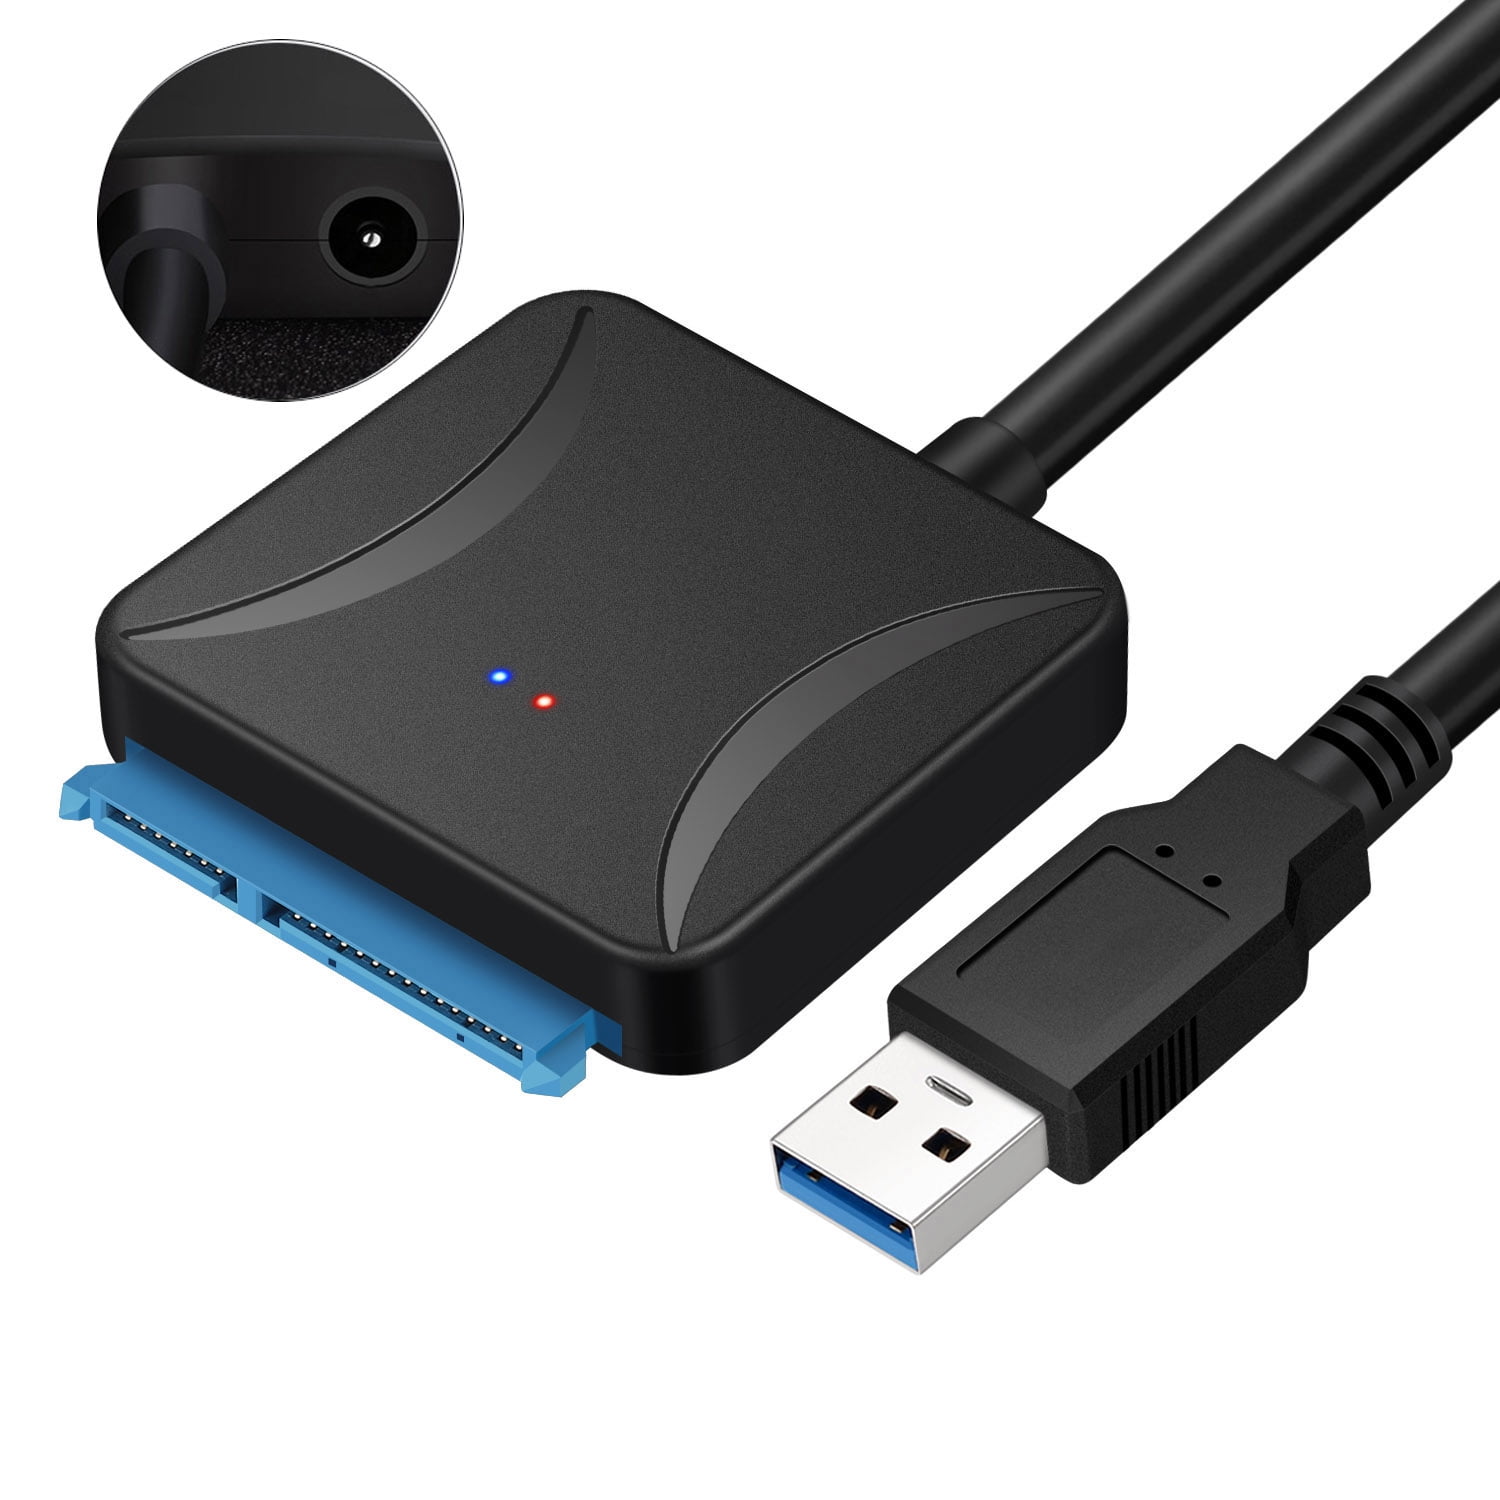 januar Kommunikationsnetværk Behandle SATA to USB 3.0 Adapter Hard Drive Cable External Disk Reader Lead Clone  Kit Connector UASP Enclosure for 2.5 3.5 Samsung Crucial WD Seagate Toshiba  Internal HDD SSD,PS4,Xbox,Laptop,MacBook,TV - Walmart.com